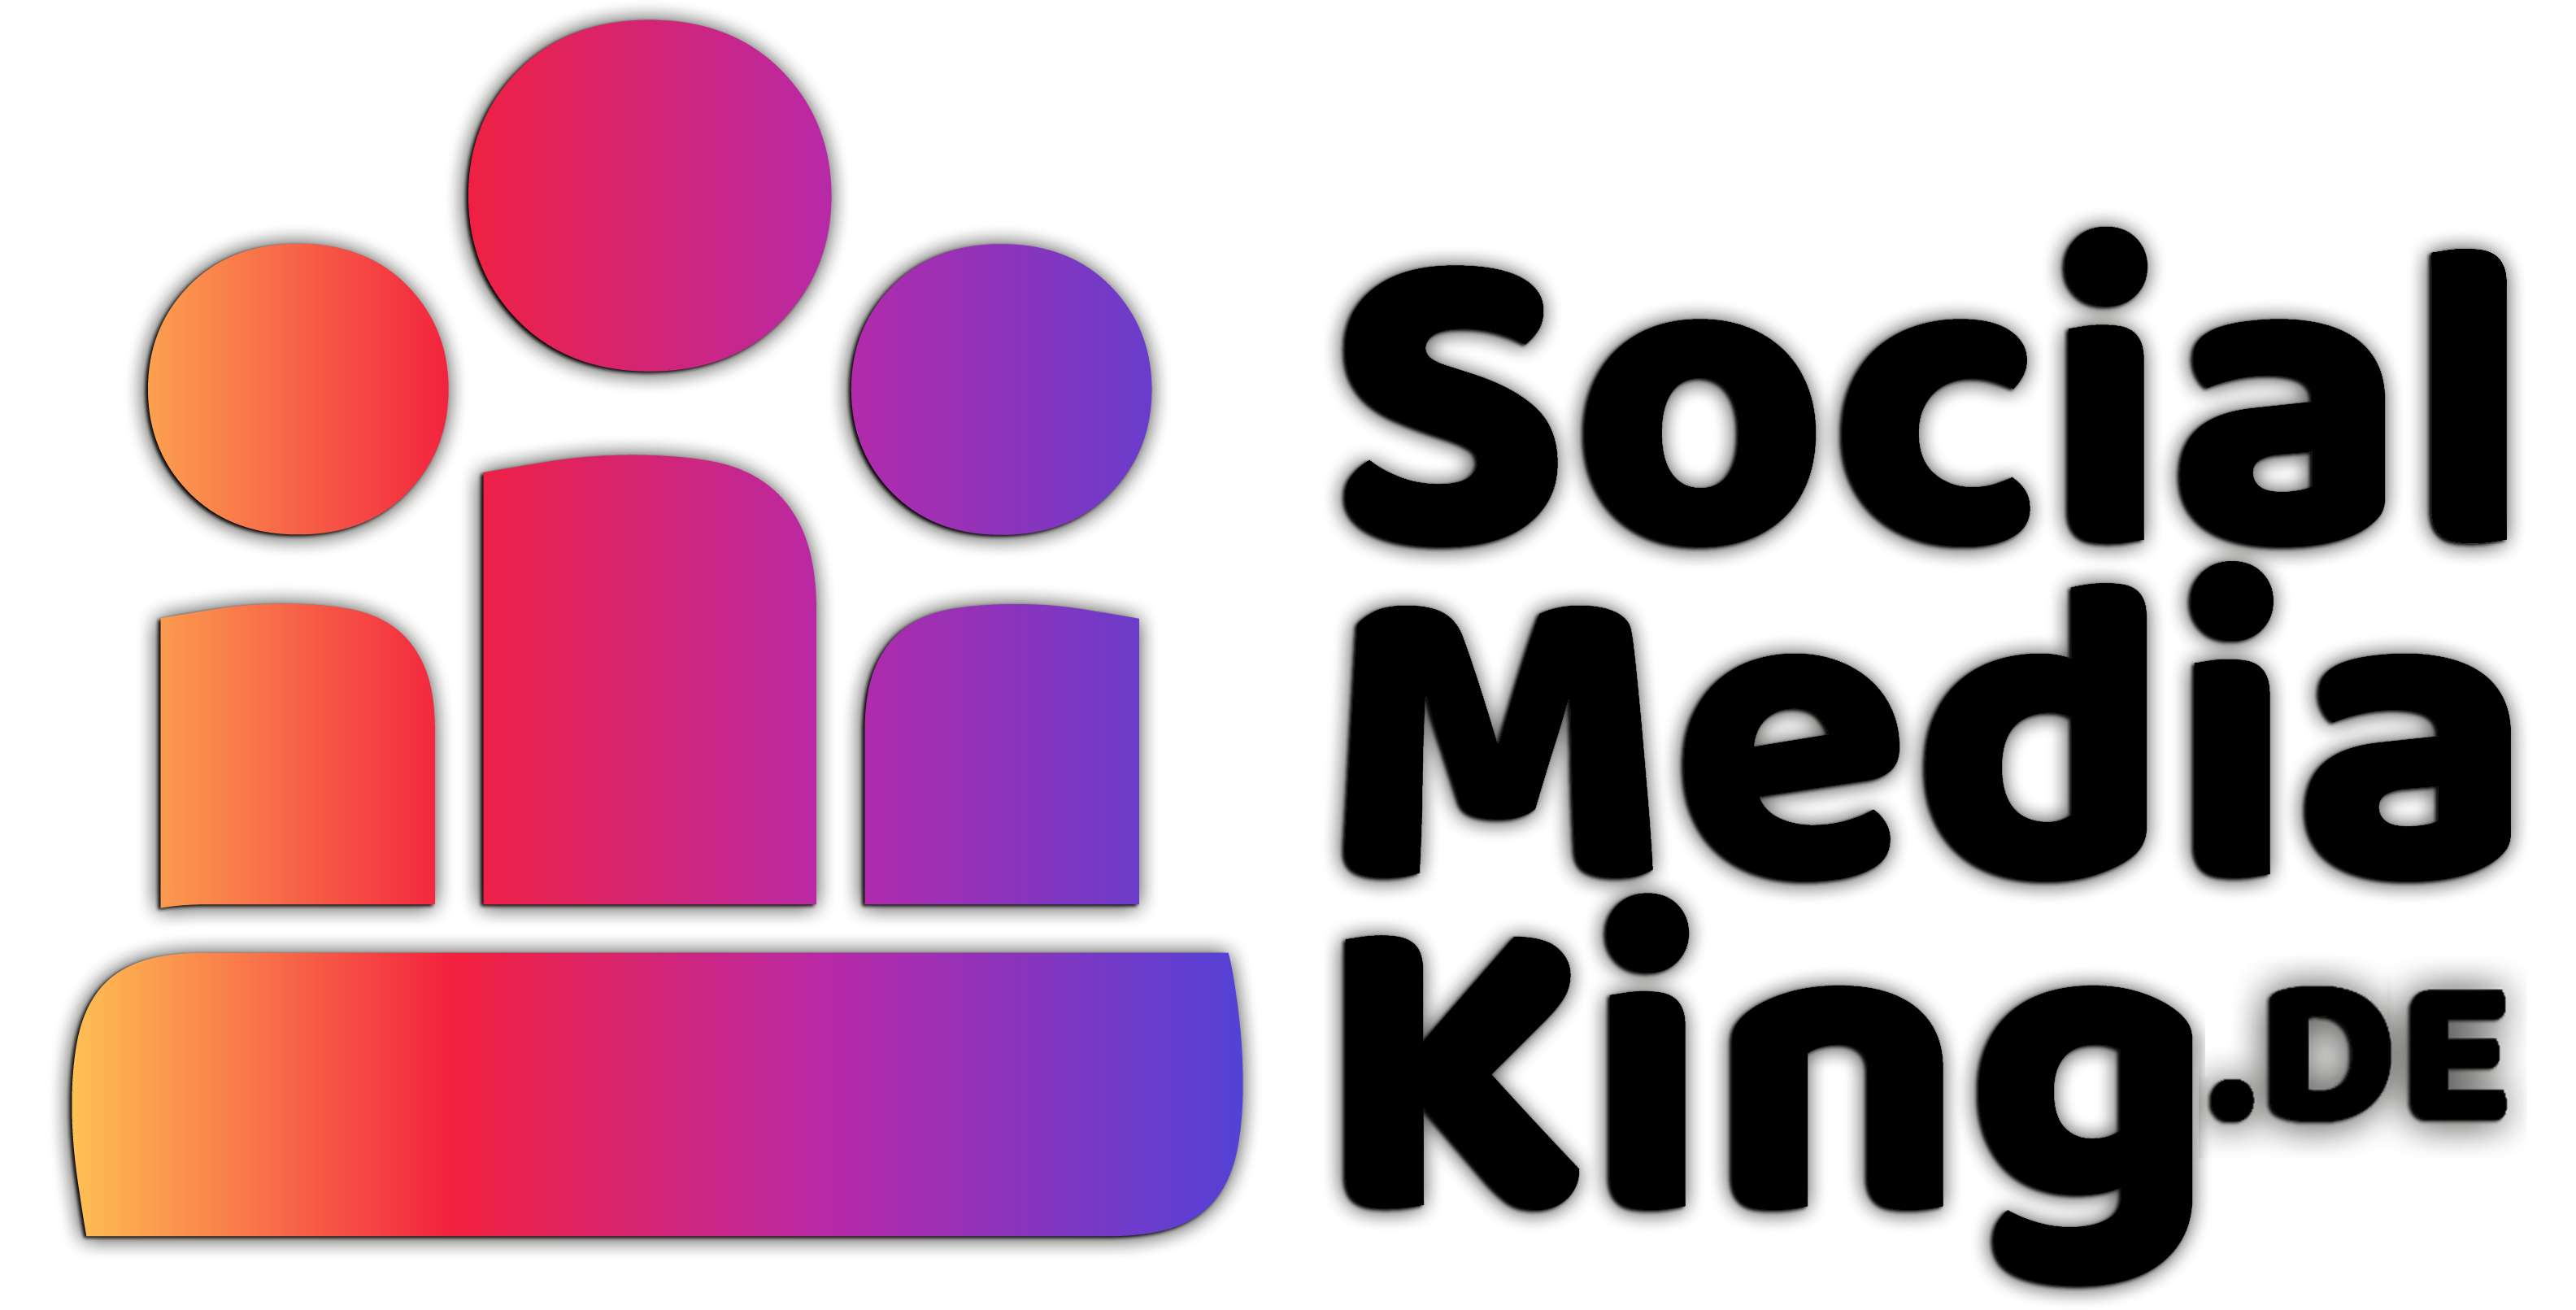 LOGO SOCIAL MEDIA KING LOGO SCHWARZ 2020